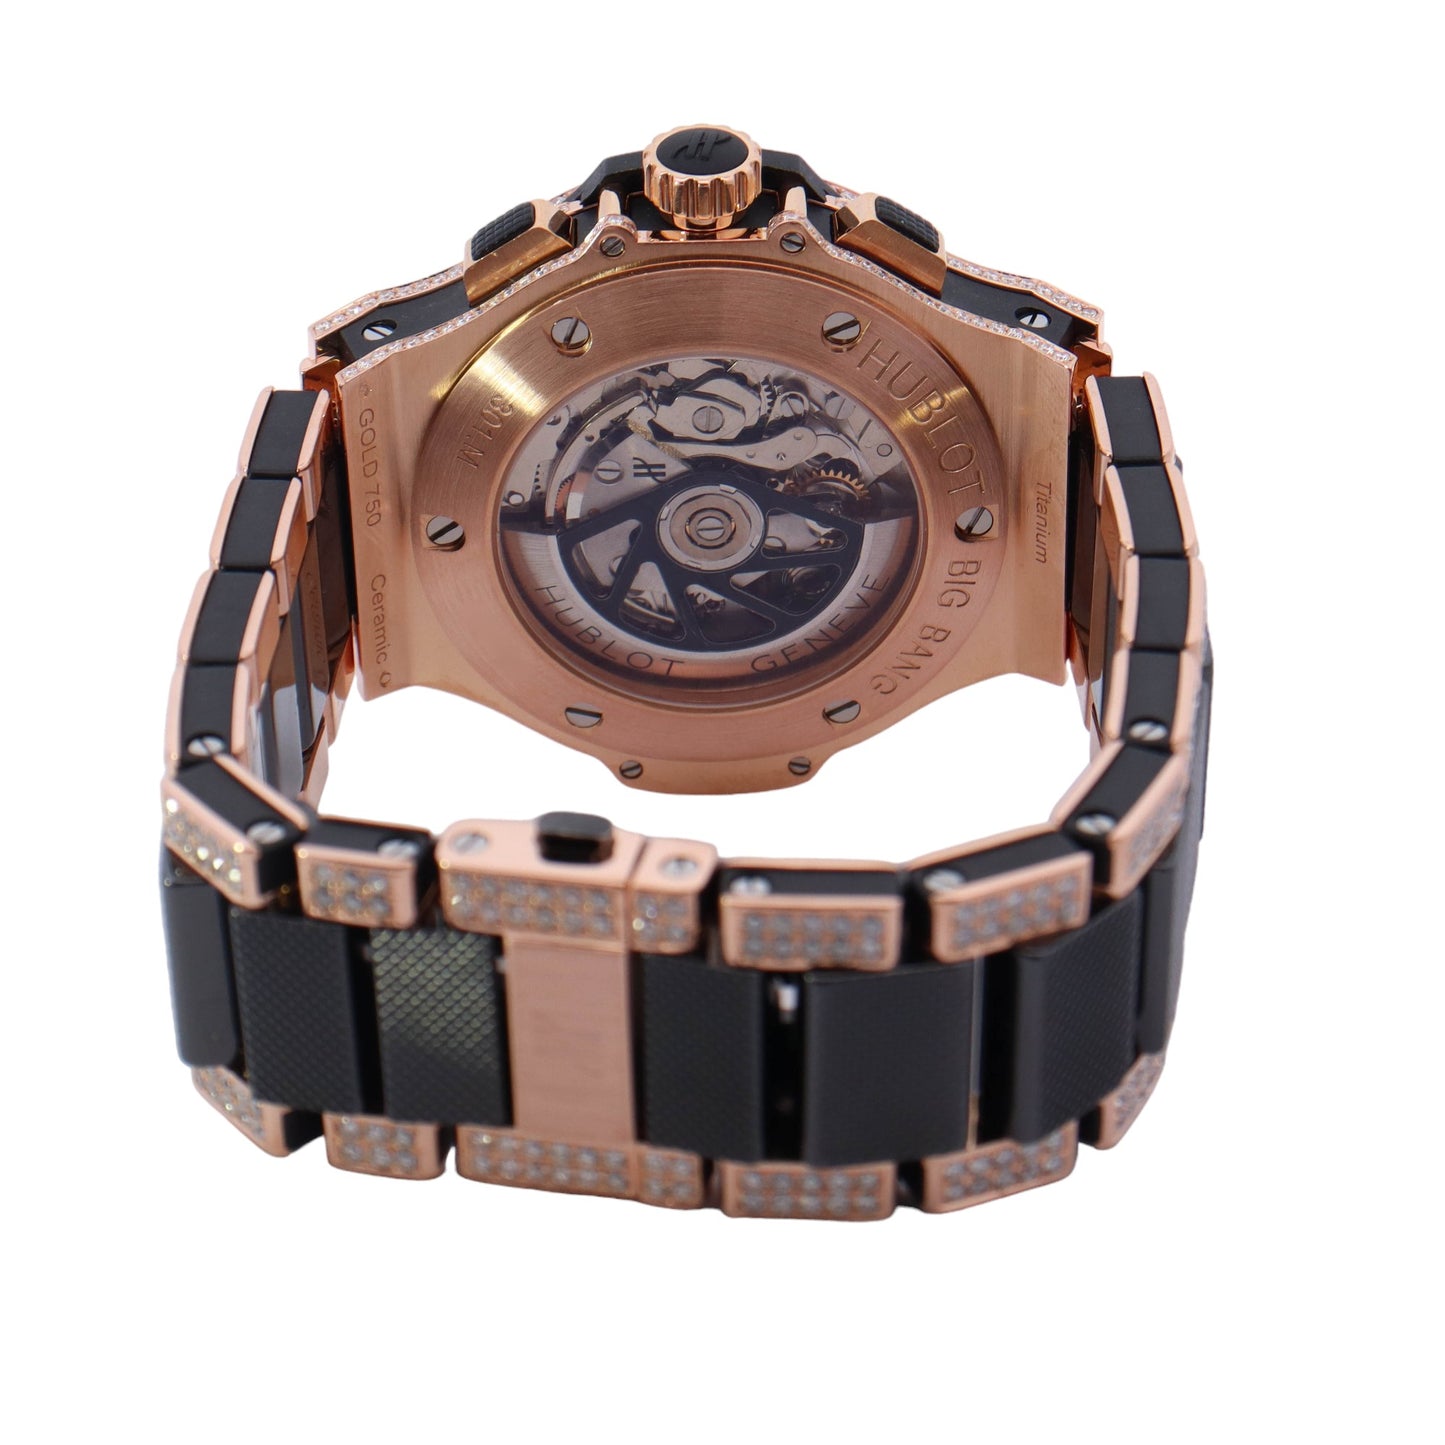 Hublot Big Bang Rose Gold 44mm Custom Pave Diamond Dial Watch Reference#: 301.PB.131.PB - Happy Jewelers Fine Jewelry Lifetime Warranty